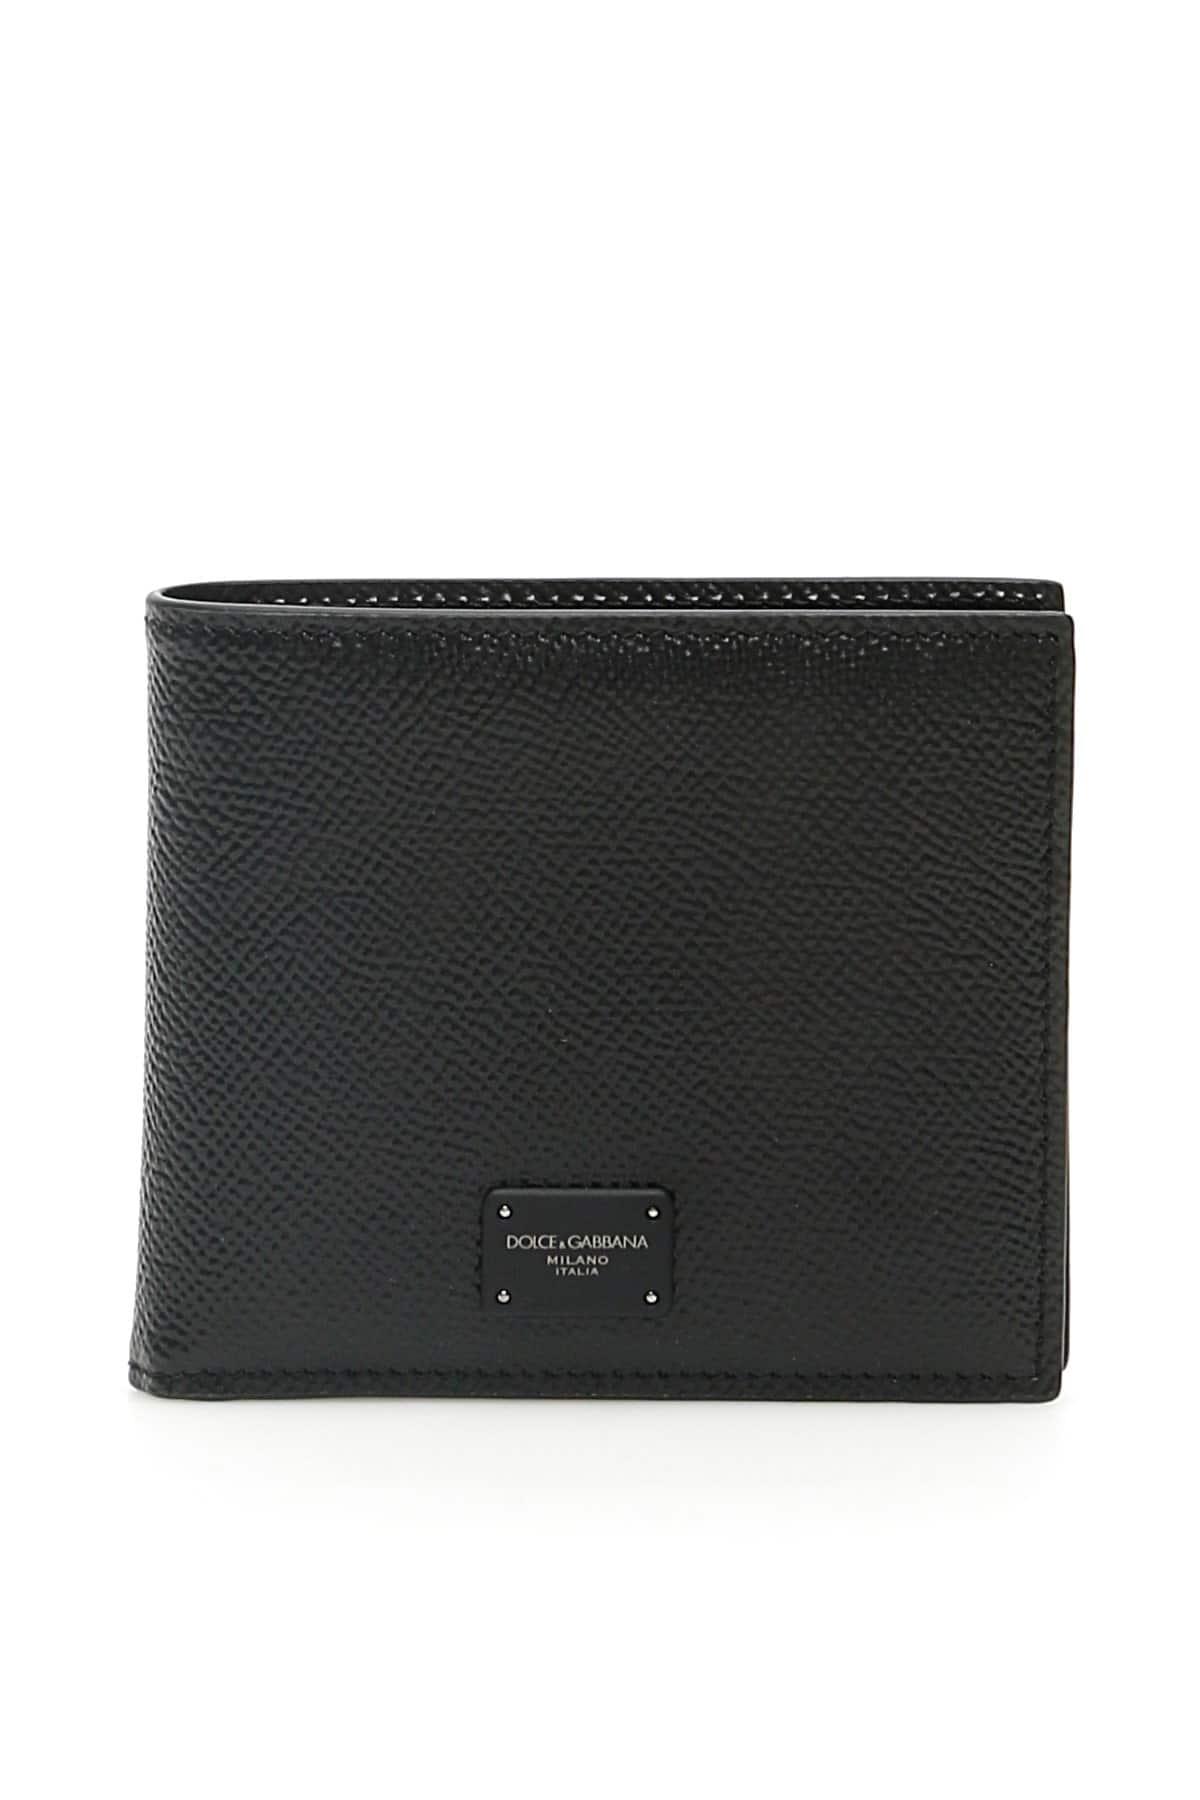 Dolce & Gabbana Leather Branded Bifold Wallet in Nero (Black) for Men ...